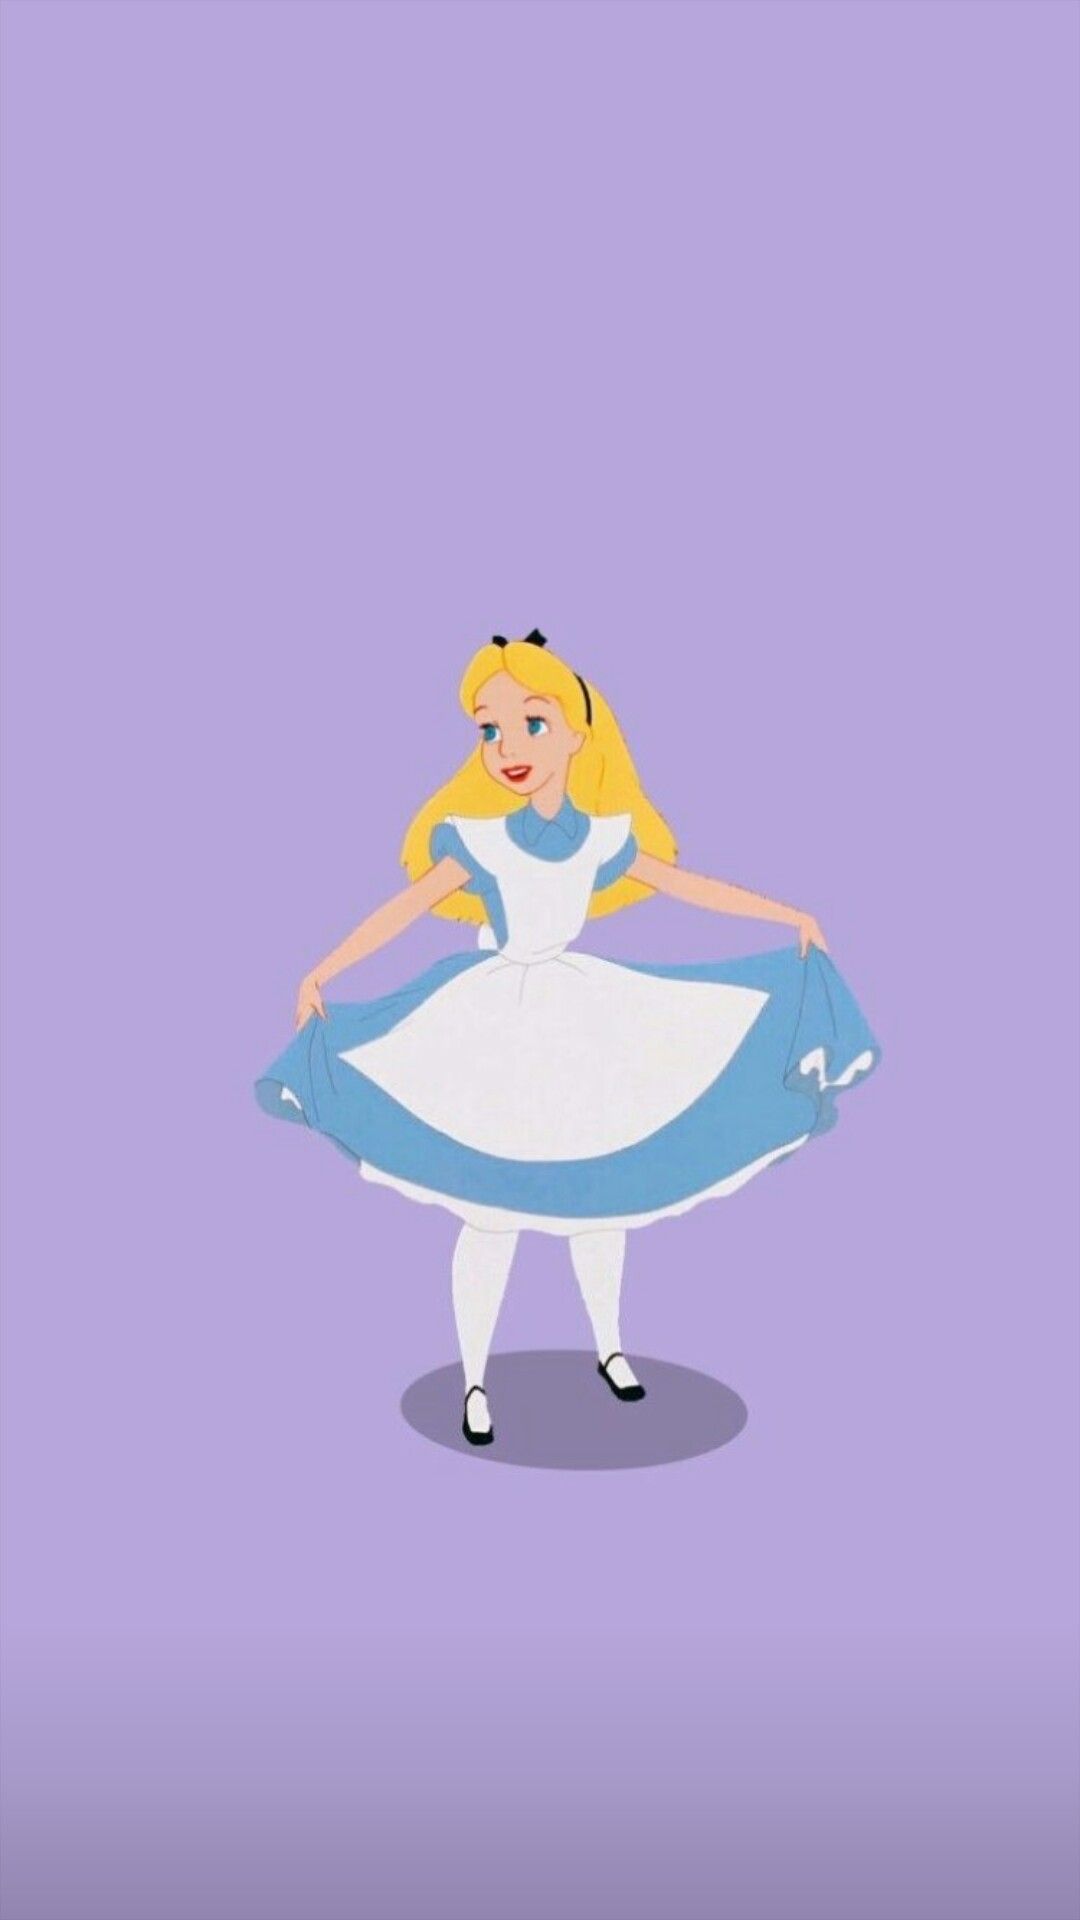 Iphone Alice In Wonderland Wallpapers